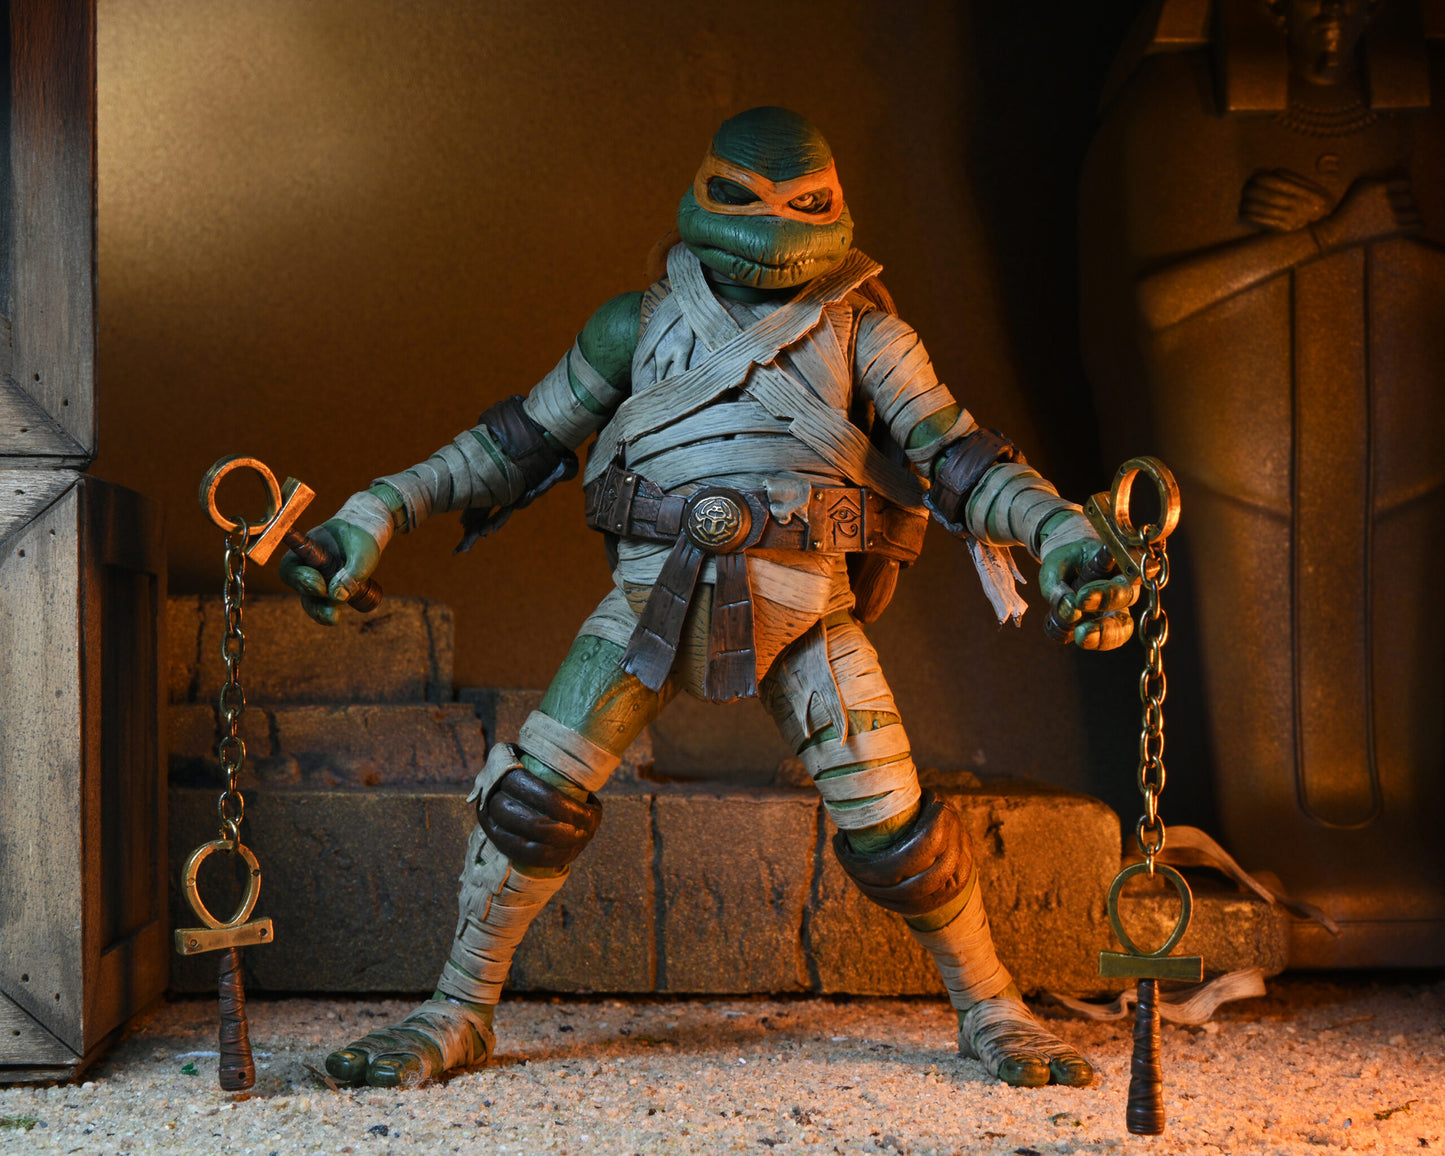 Universal Monsters/Teenage Mutant Ninja Turtles 7” Scale Action Figure – Michelangelo as The Mummy